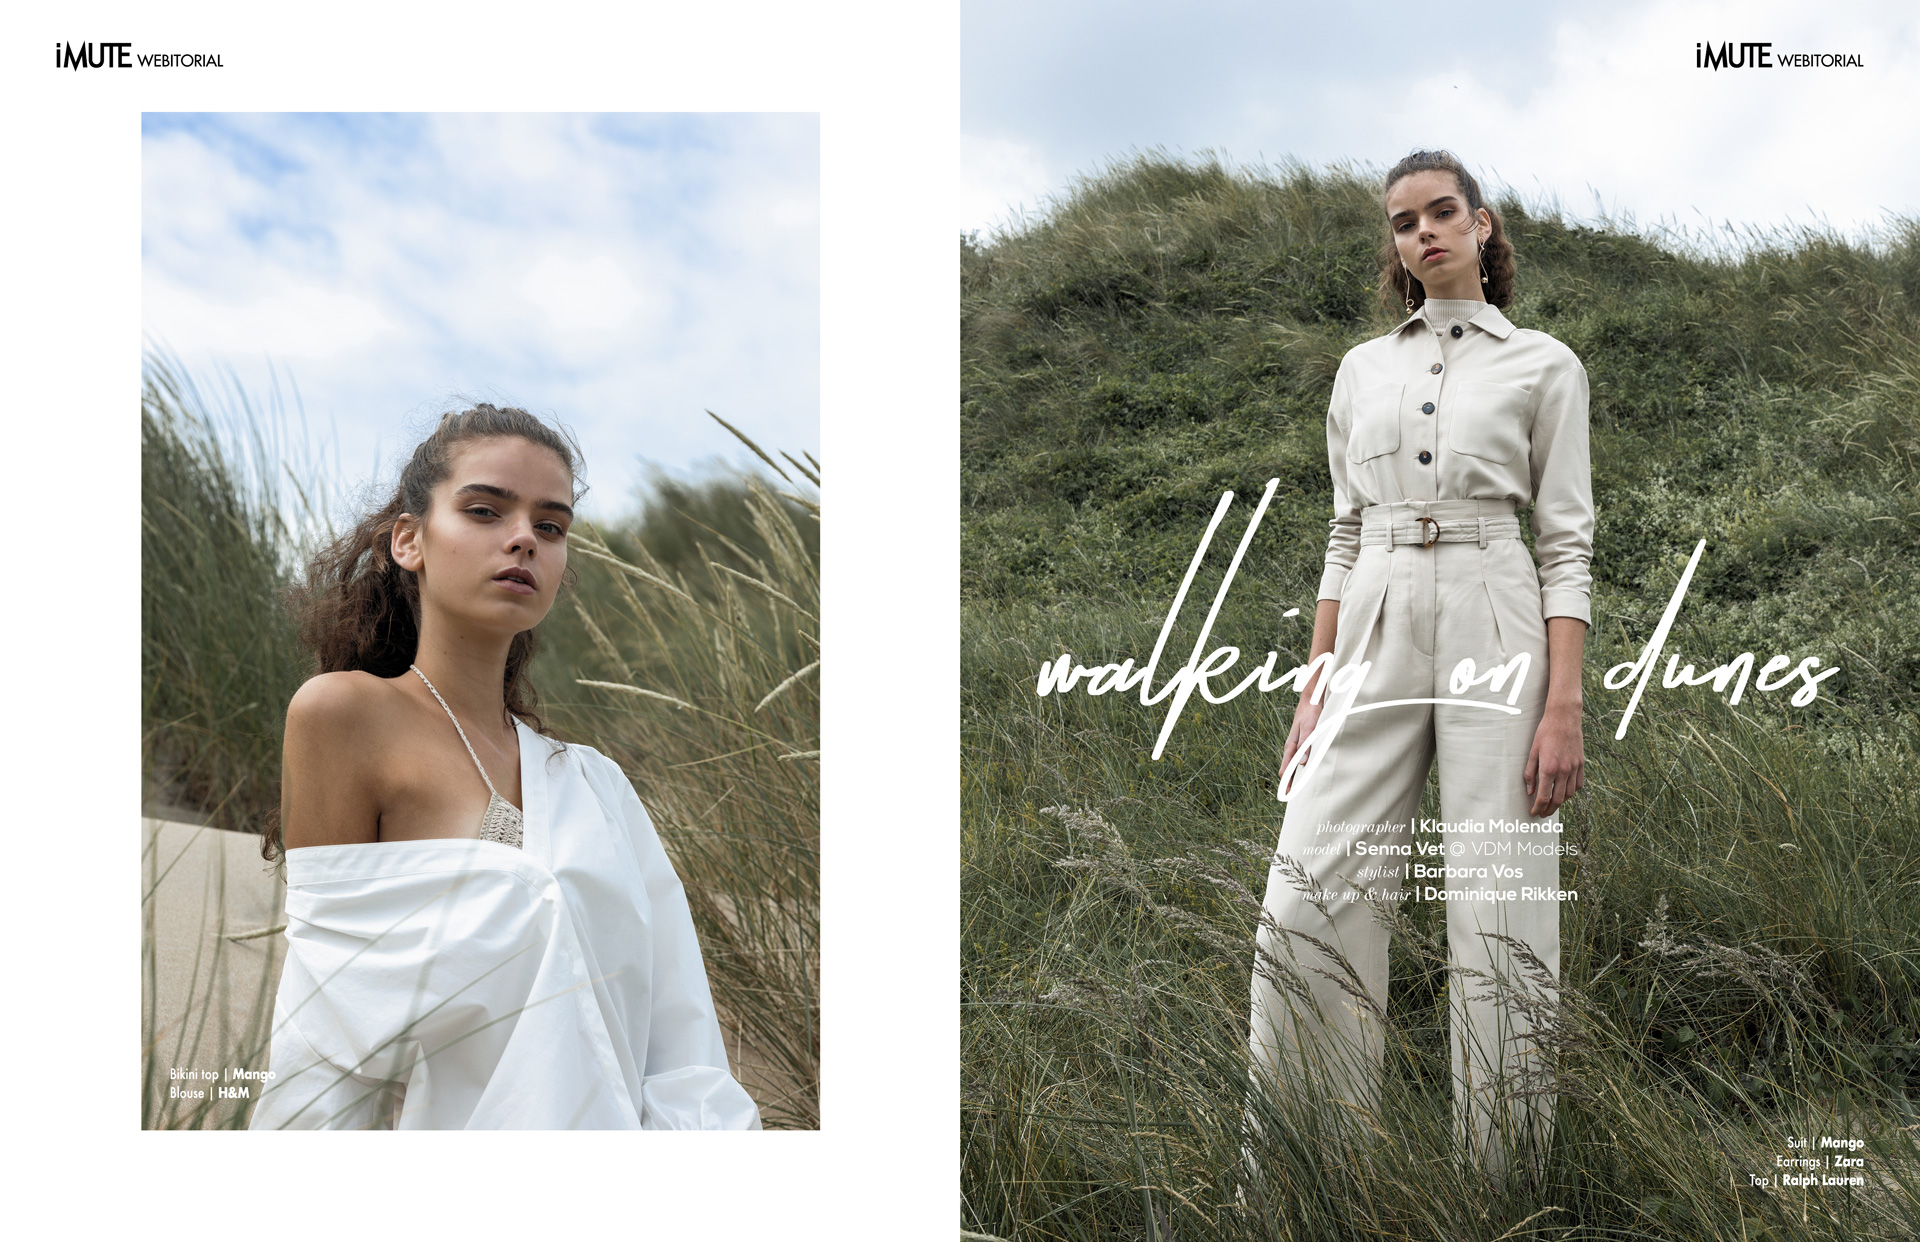 Walking on dunes webitorial for iMute Magazine  Photographer | Klaudia Molenda Model | Senna Vet @ VDM Models Stylist | Barbara Vos Makeup & Hair | Dominique Rikken